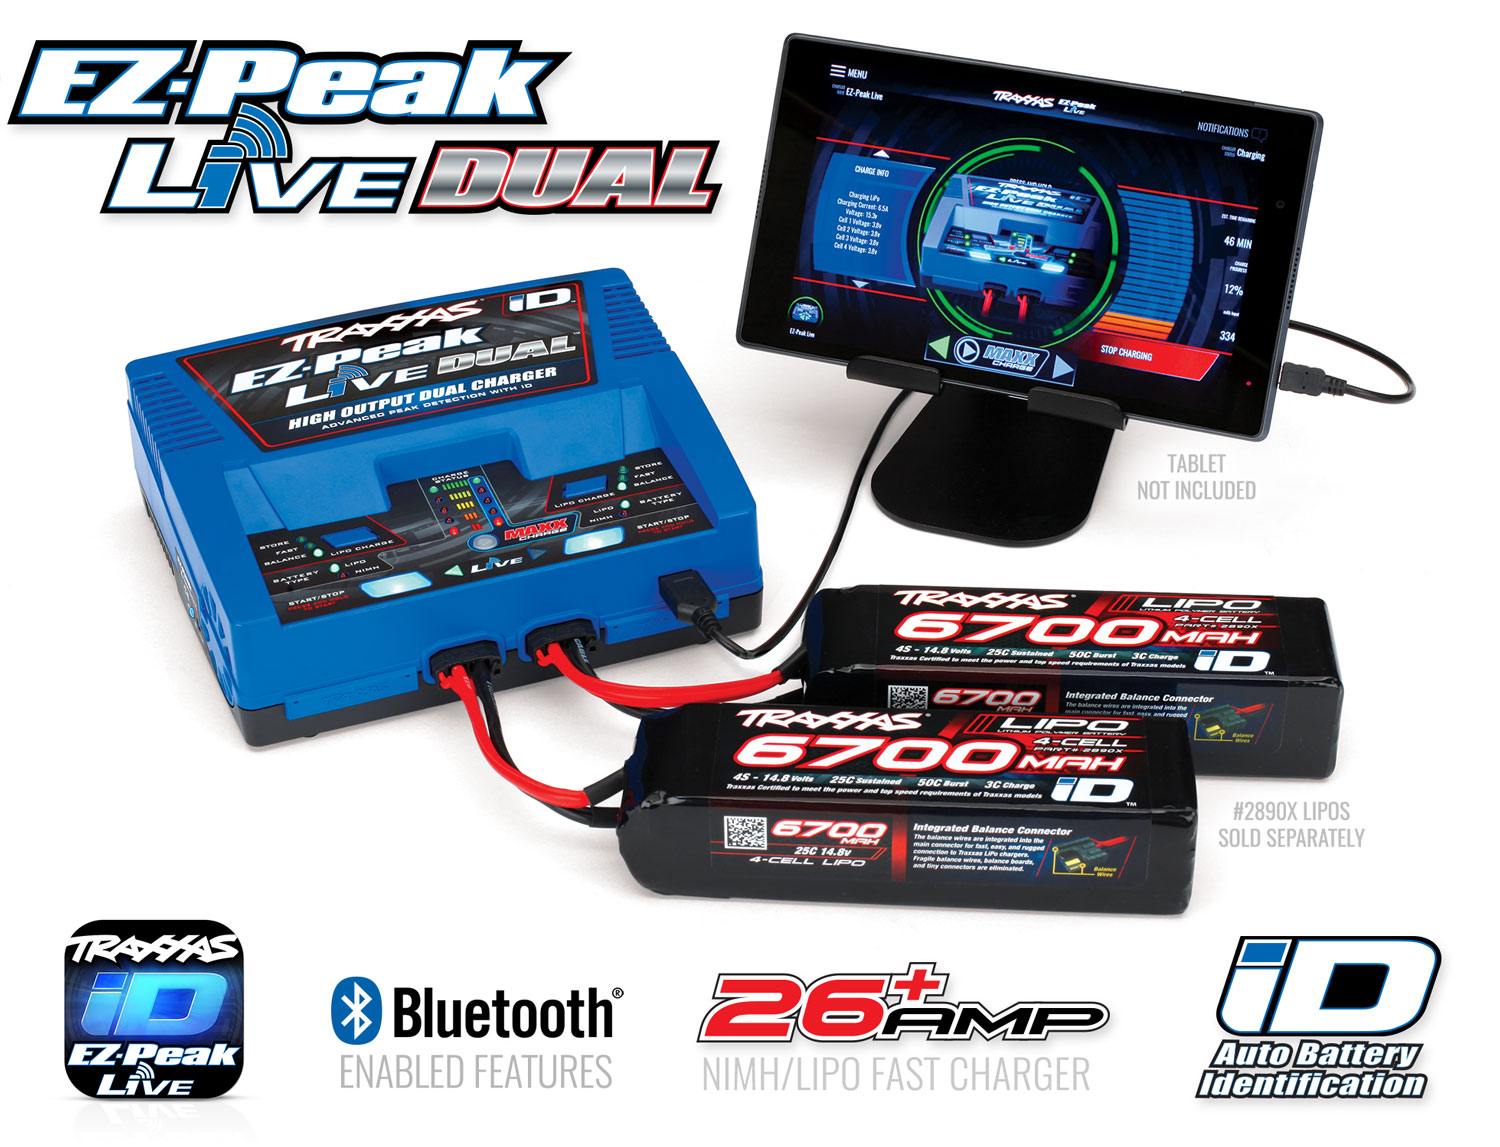 RC Car Action - RC Cars & Trucks | Traxxas Announces New EZ Peak Live Dual iD Charger